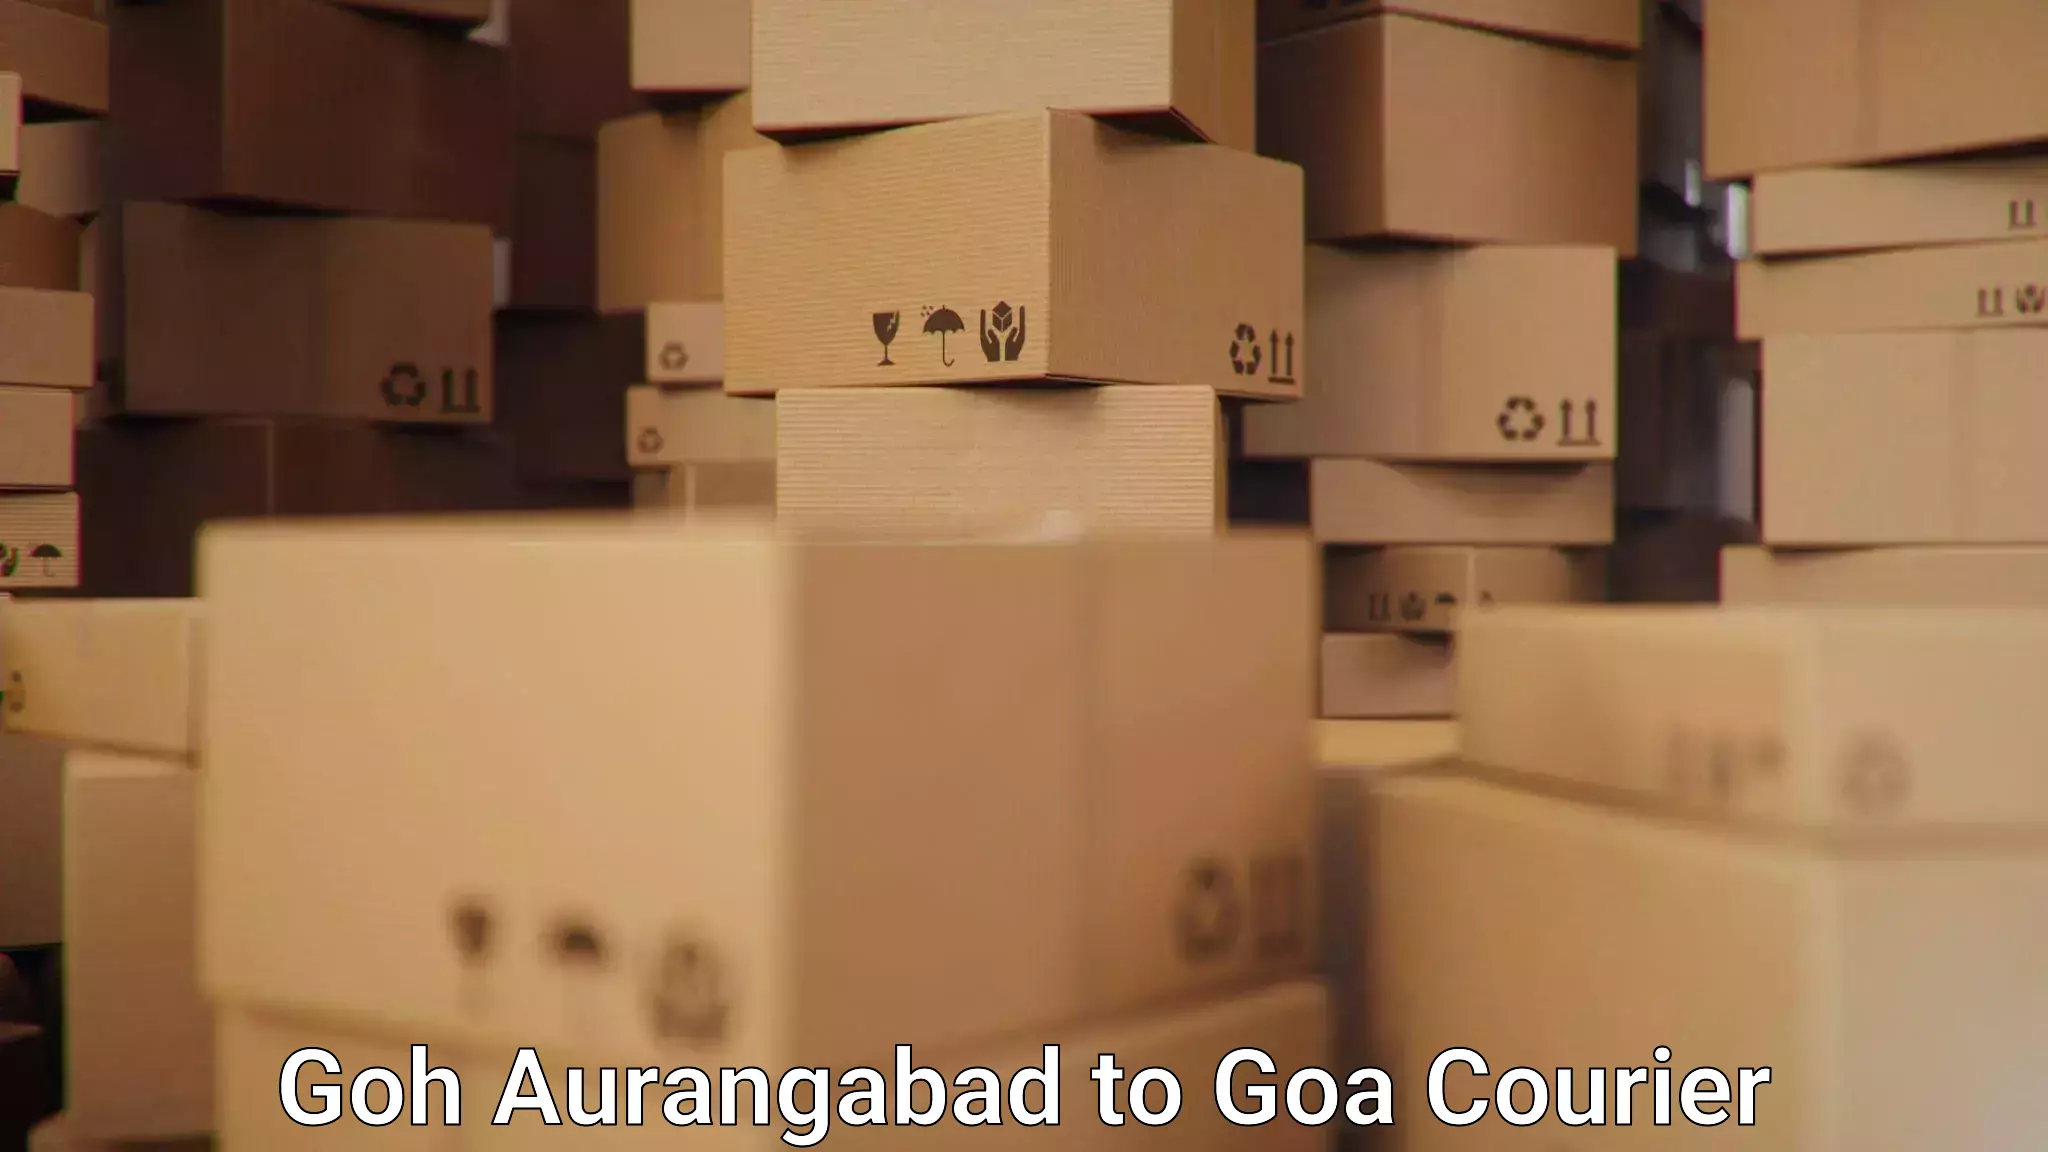 Reliable delivery network Goh Aurangabad to Vasco da Gama